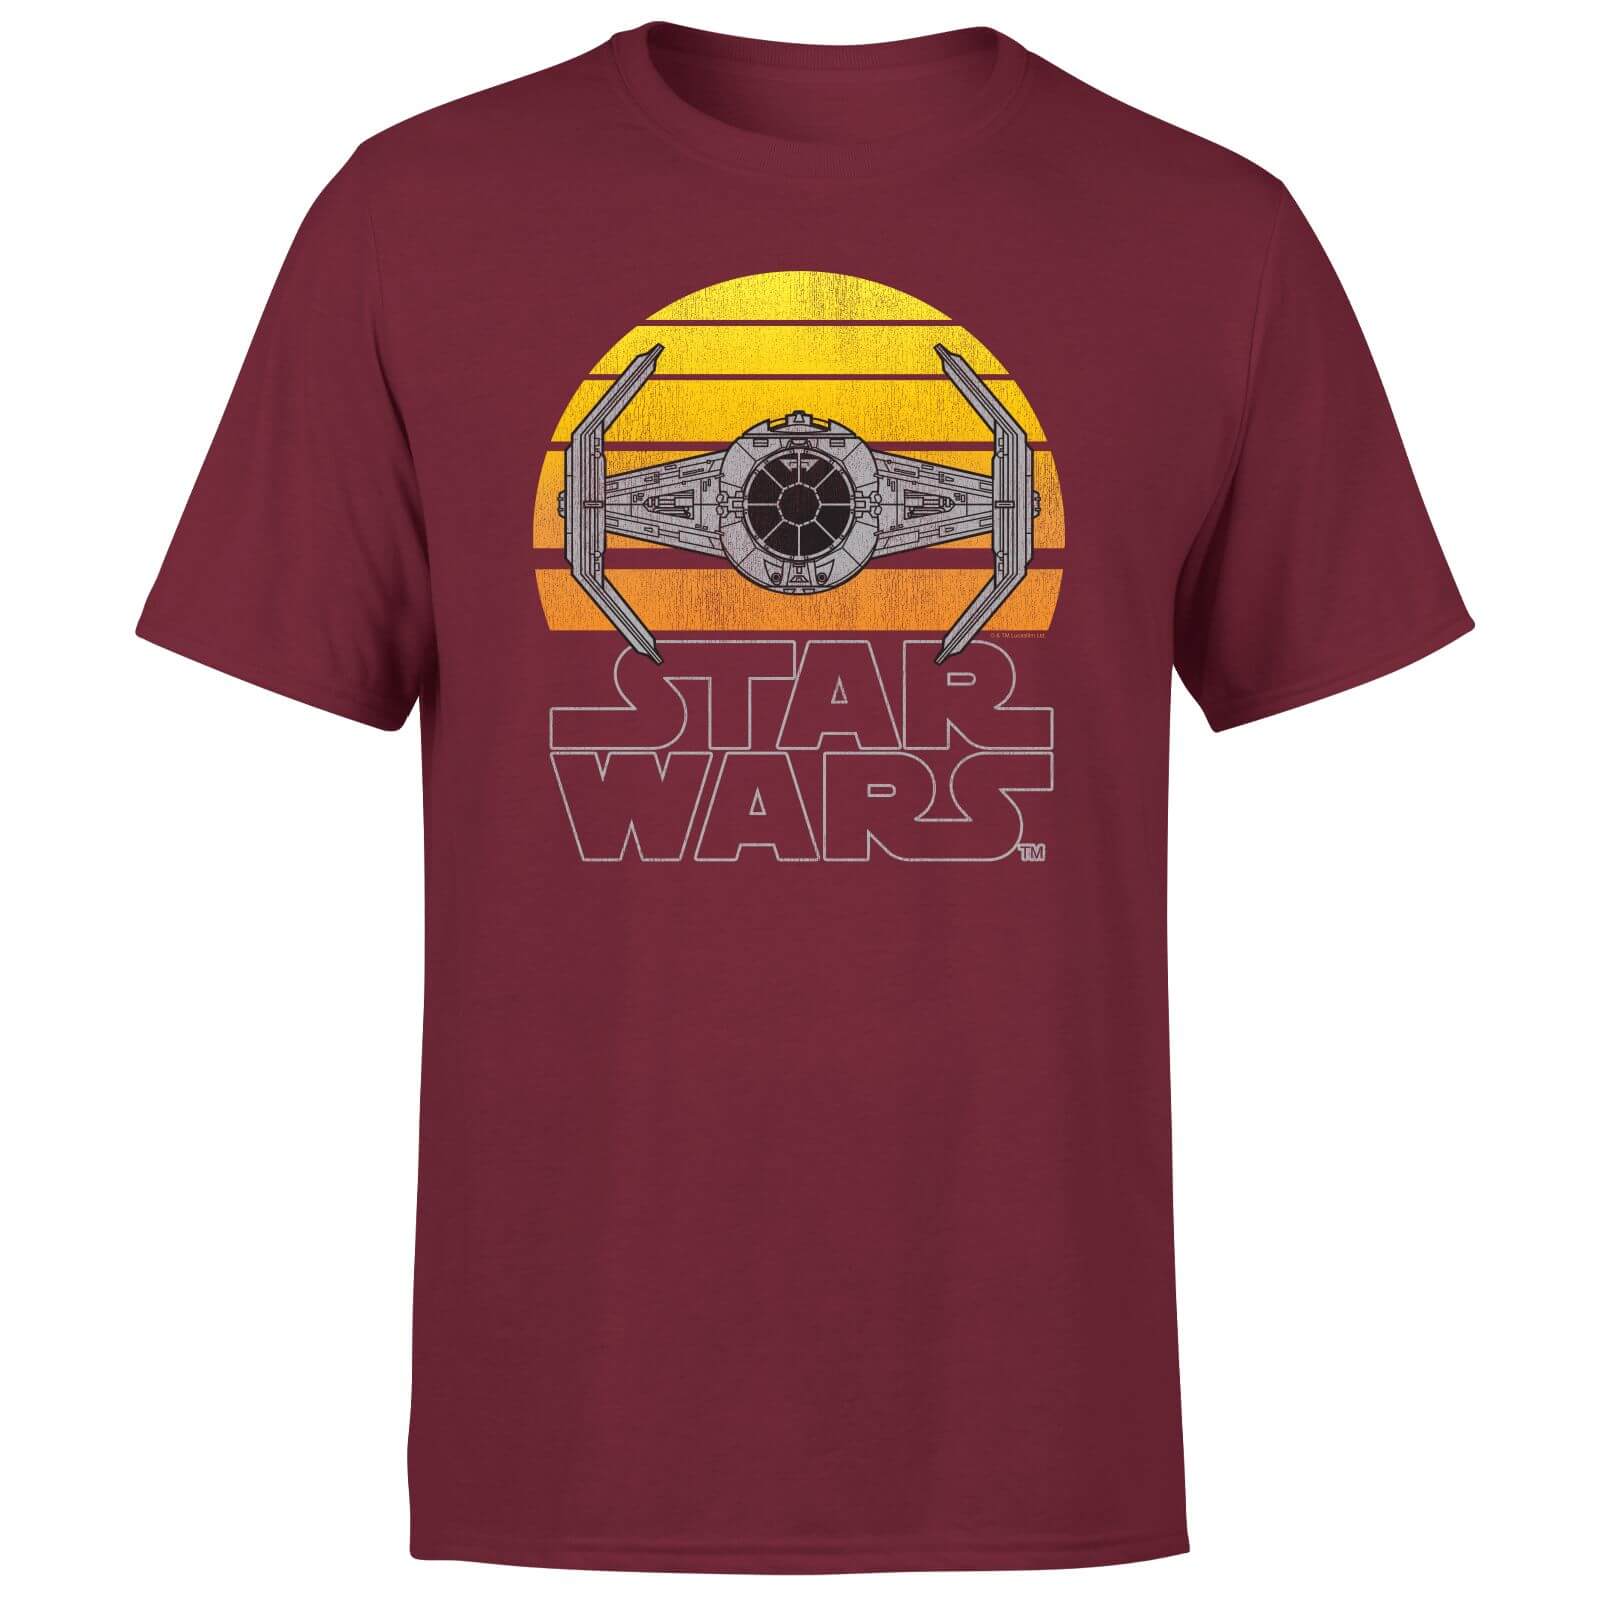 Star Wars Classic Sunset Tie Men%27s T-Shirt - Burgundy - M - Burgundy